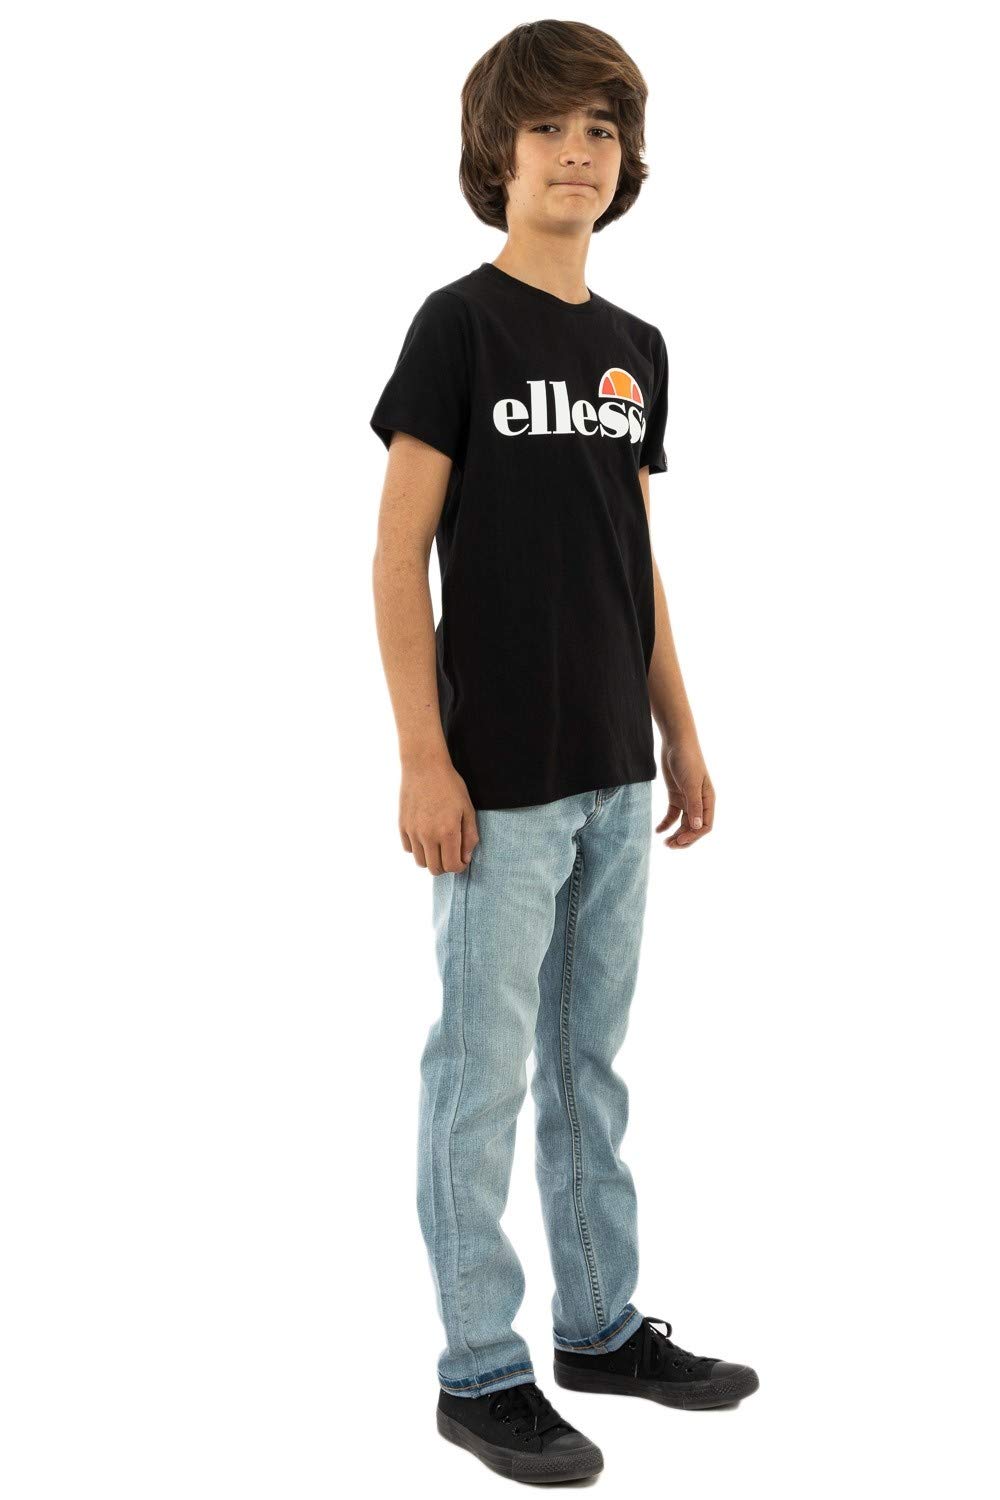 Ellesse Boy's Malia T-shirt